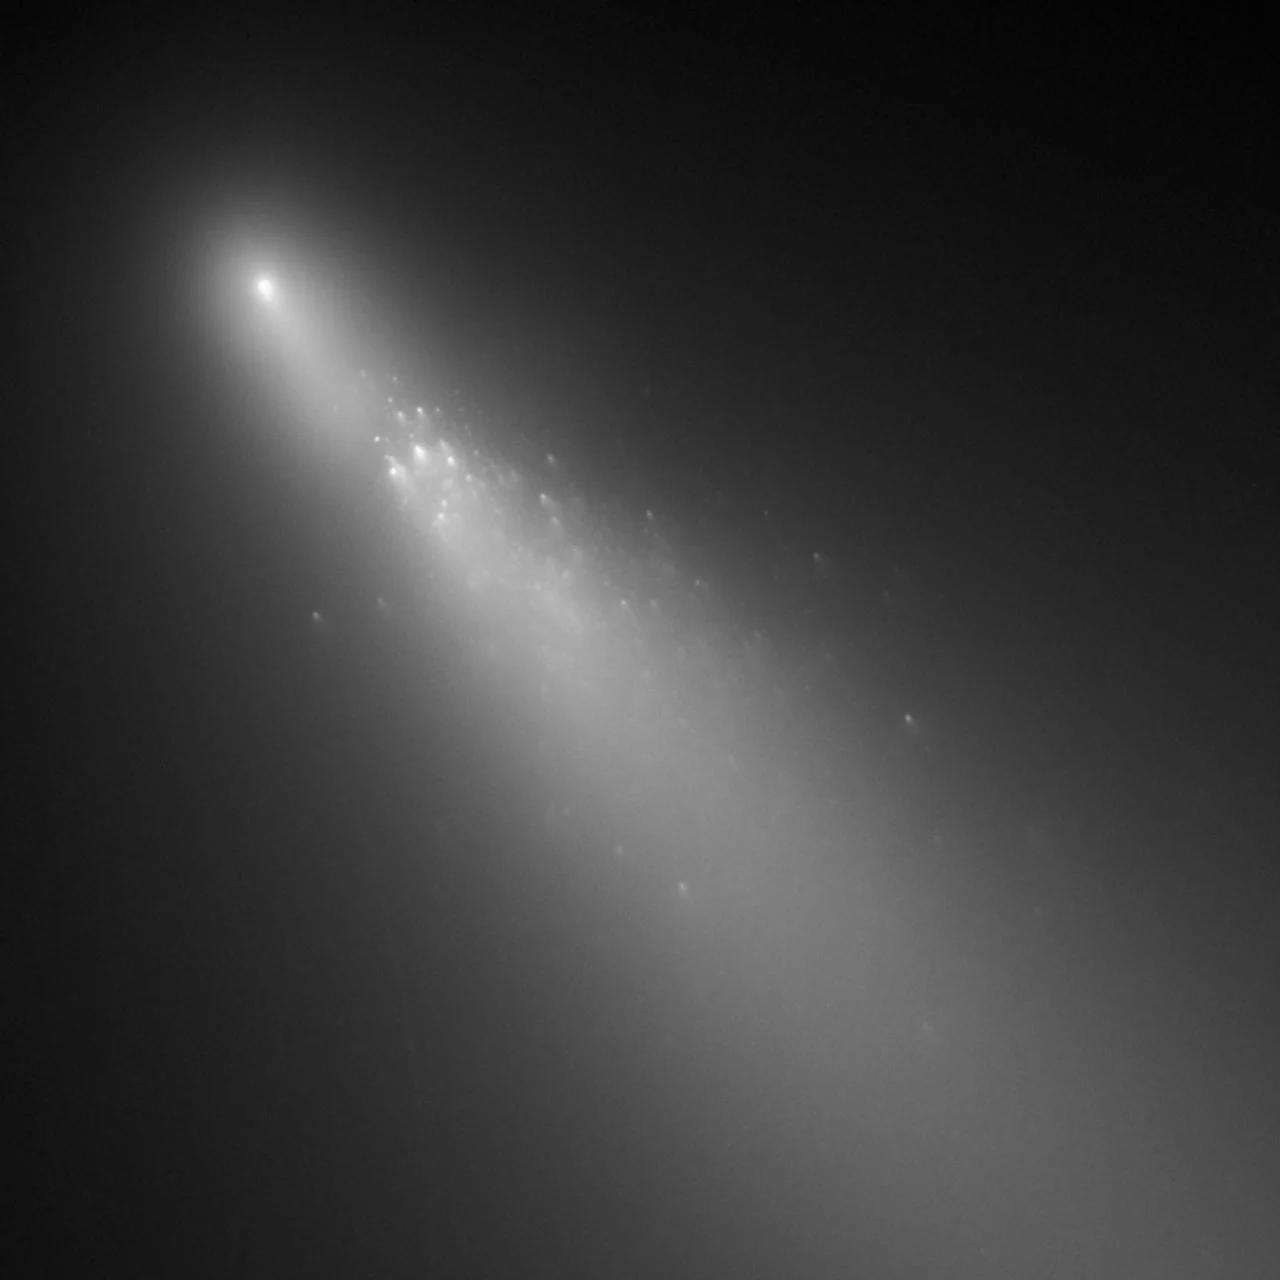 Shattered comet 73P/Schwassmann-Wachmann 3